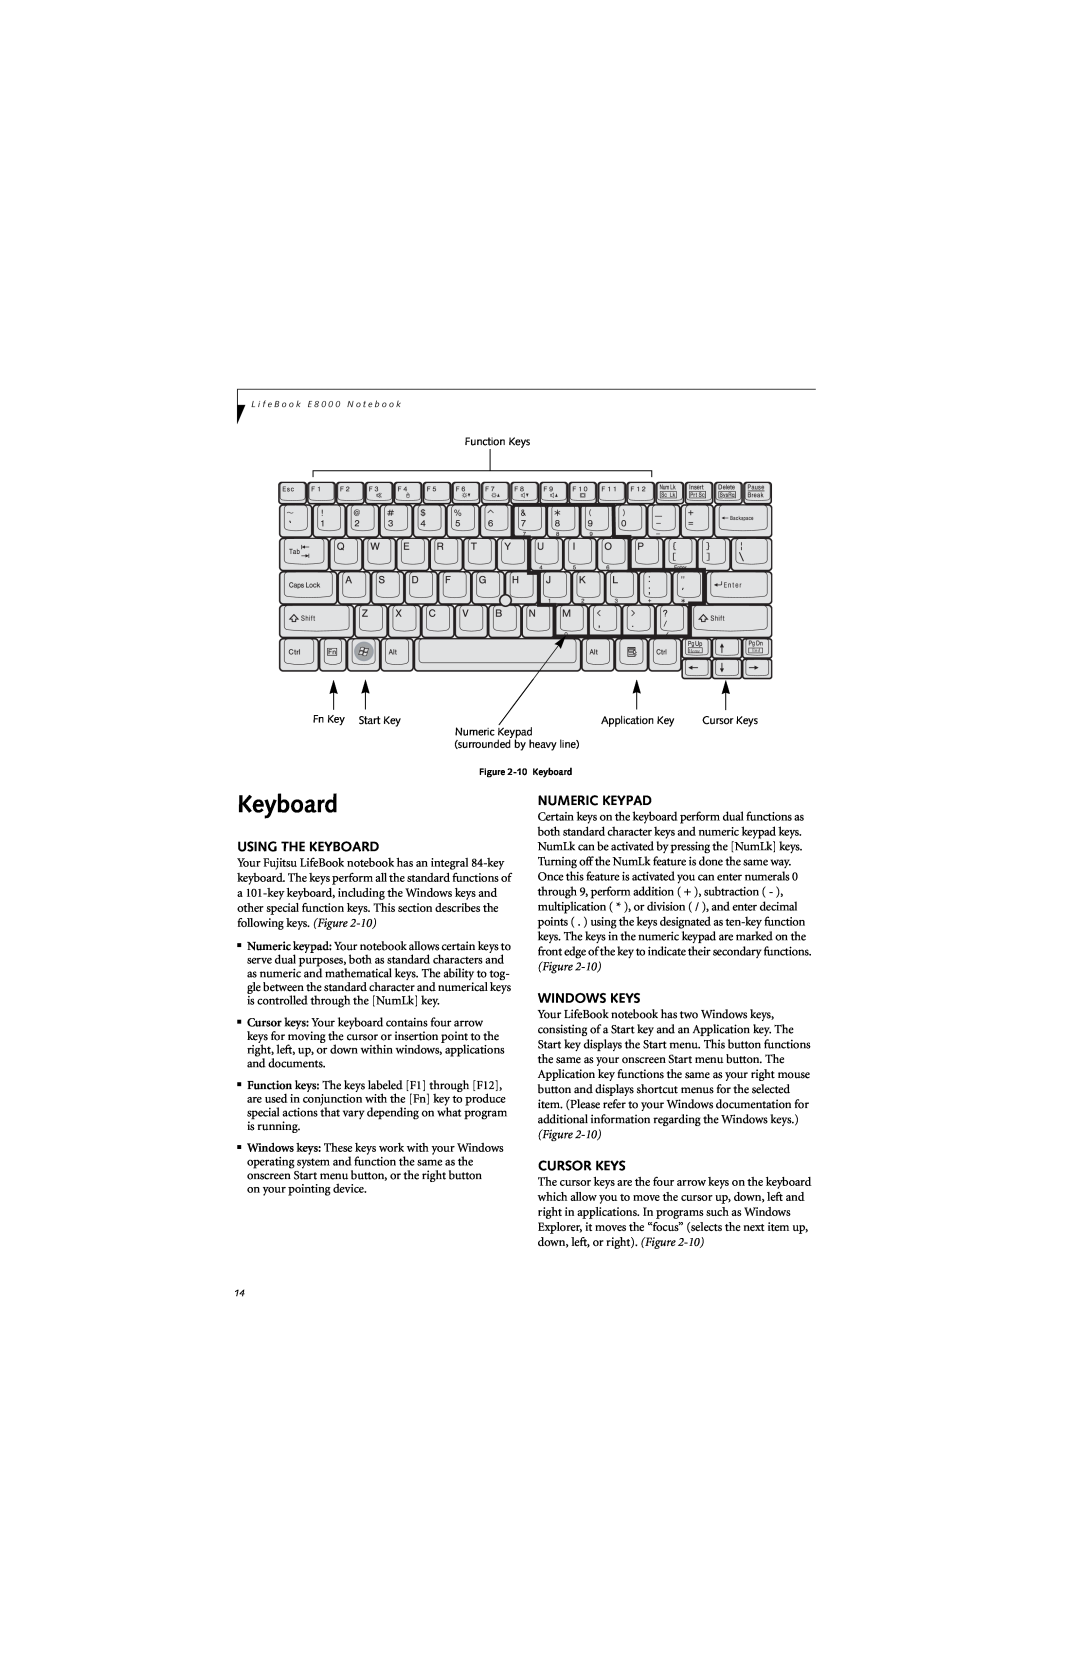 Fujitsu E8310 manual Using The Keyboard, Numeric Keypad, Windows Keys, Cursor Keys 